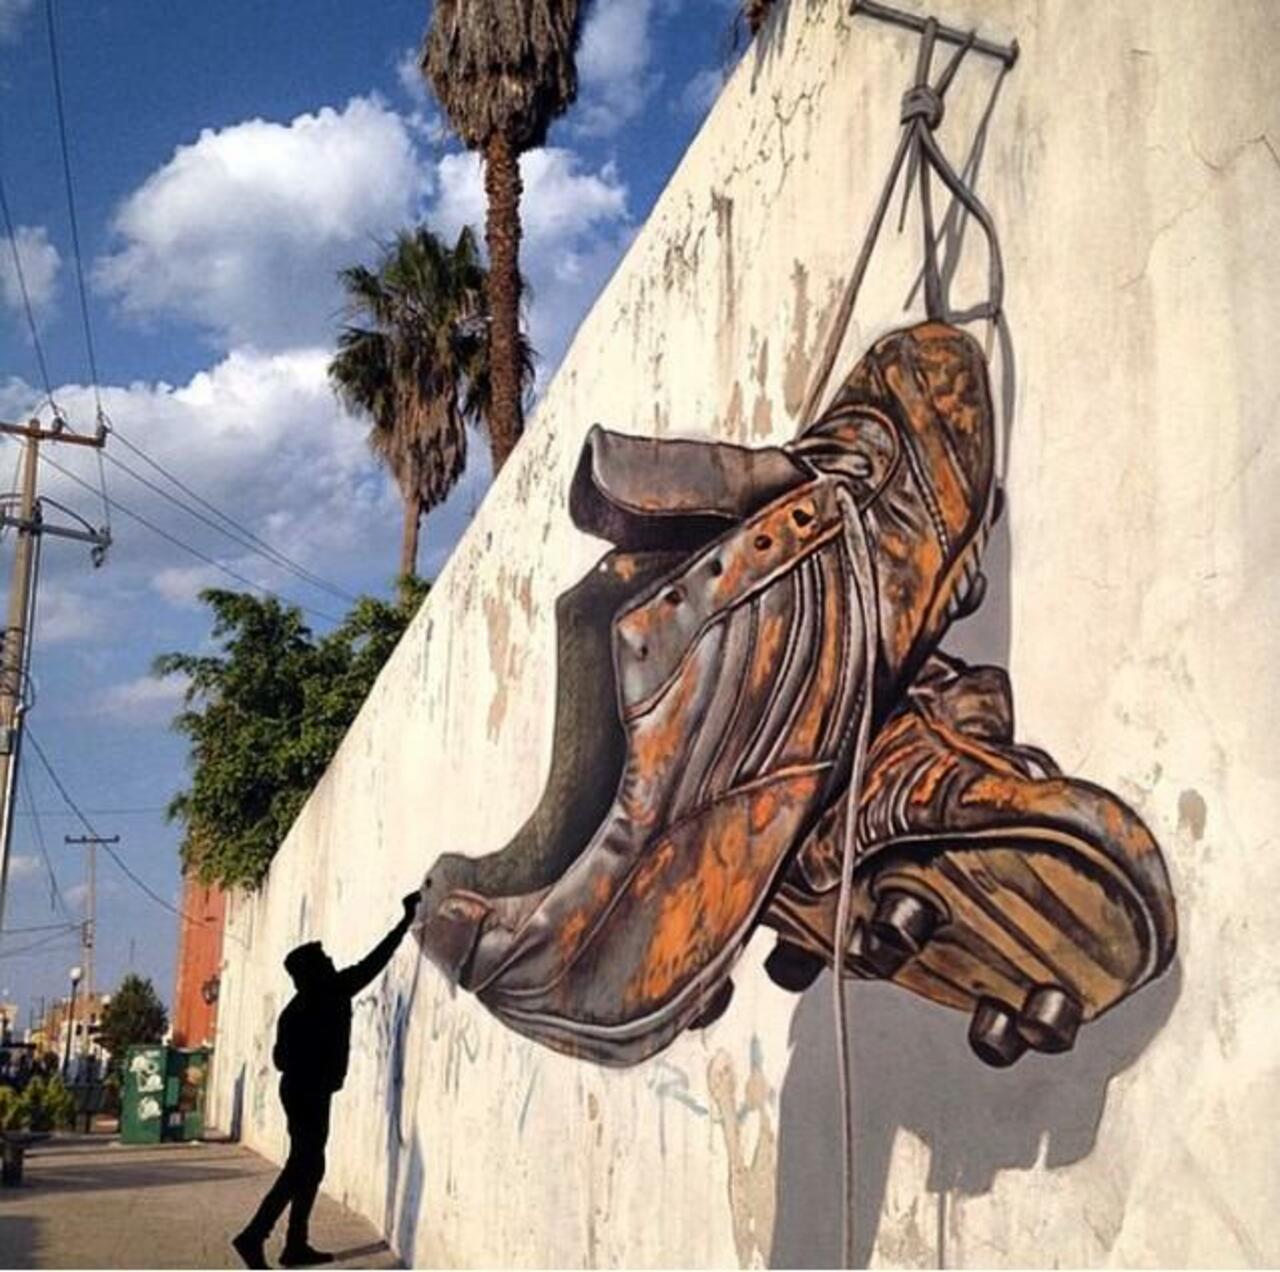 Sistemas4s: Awesome anamorphic 3D Street Art by Juandres Vera 

#art #graffiti #mural #streetart http://t.co/ou0GJ5S8jk